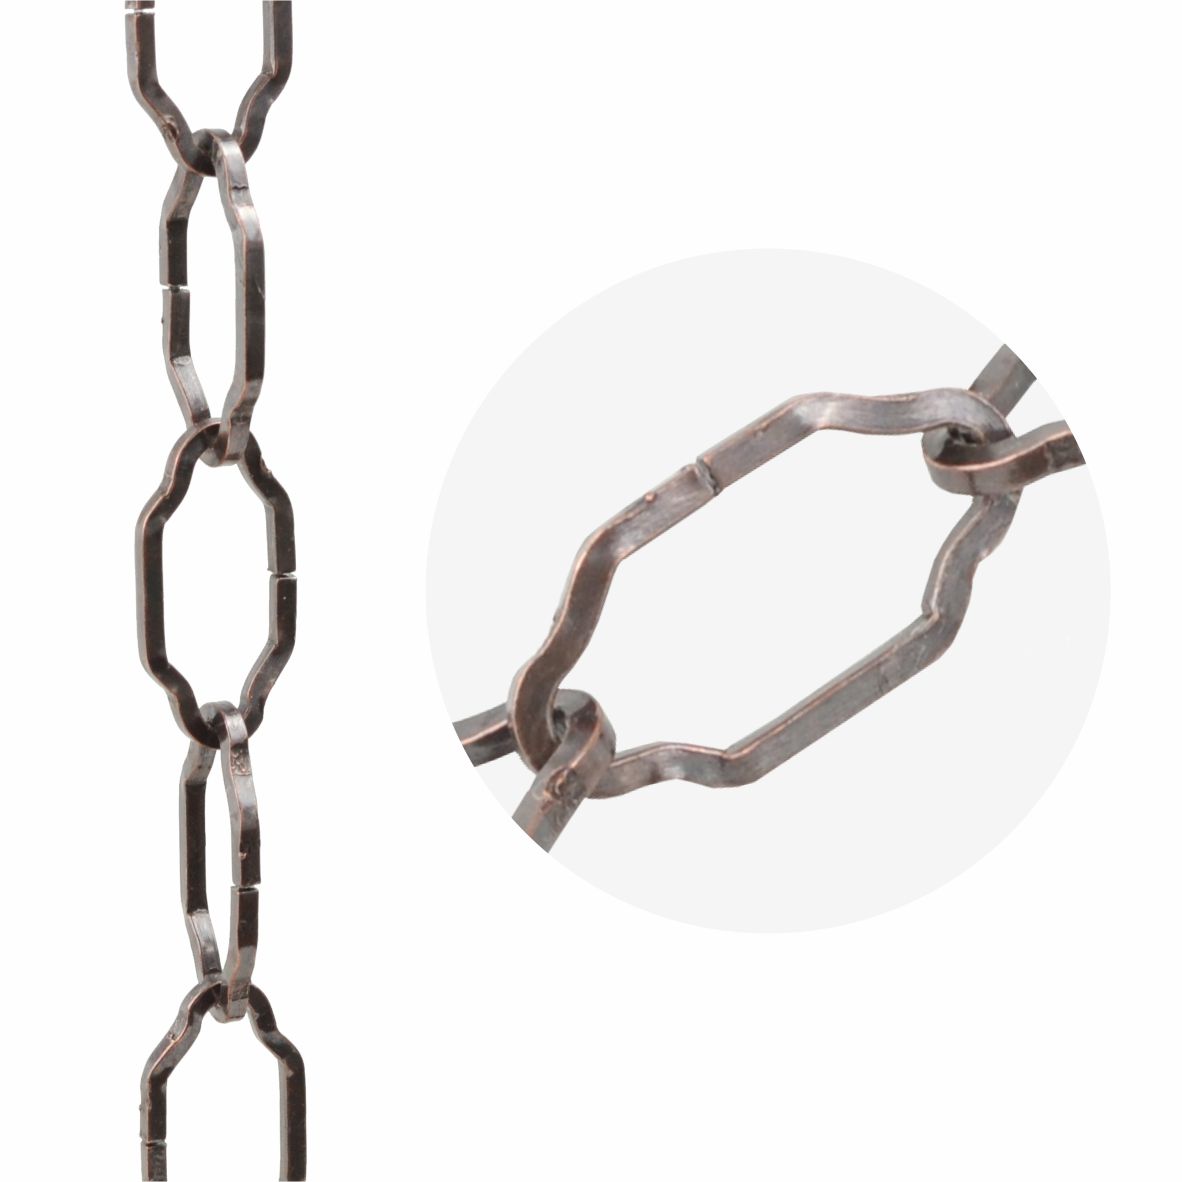 Electro-Bronzed Steel Decorative Gothic Chain